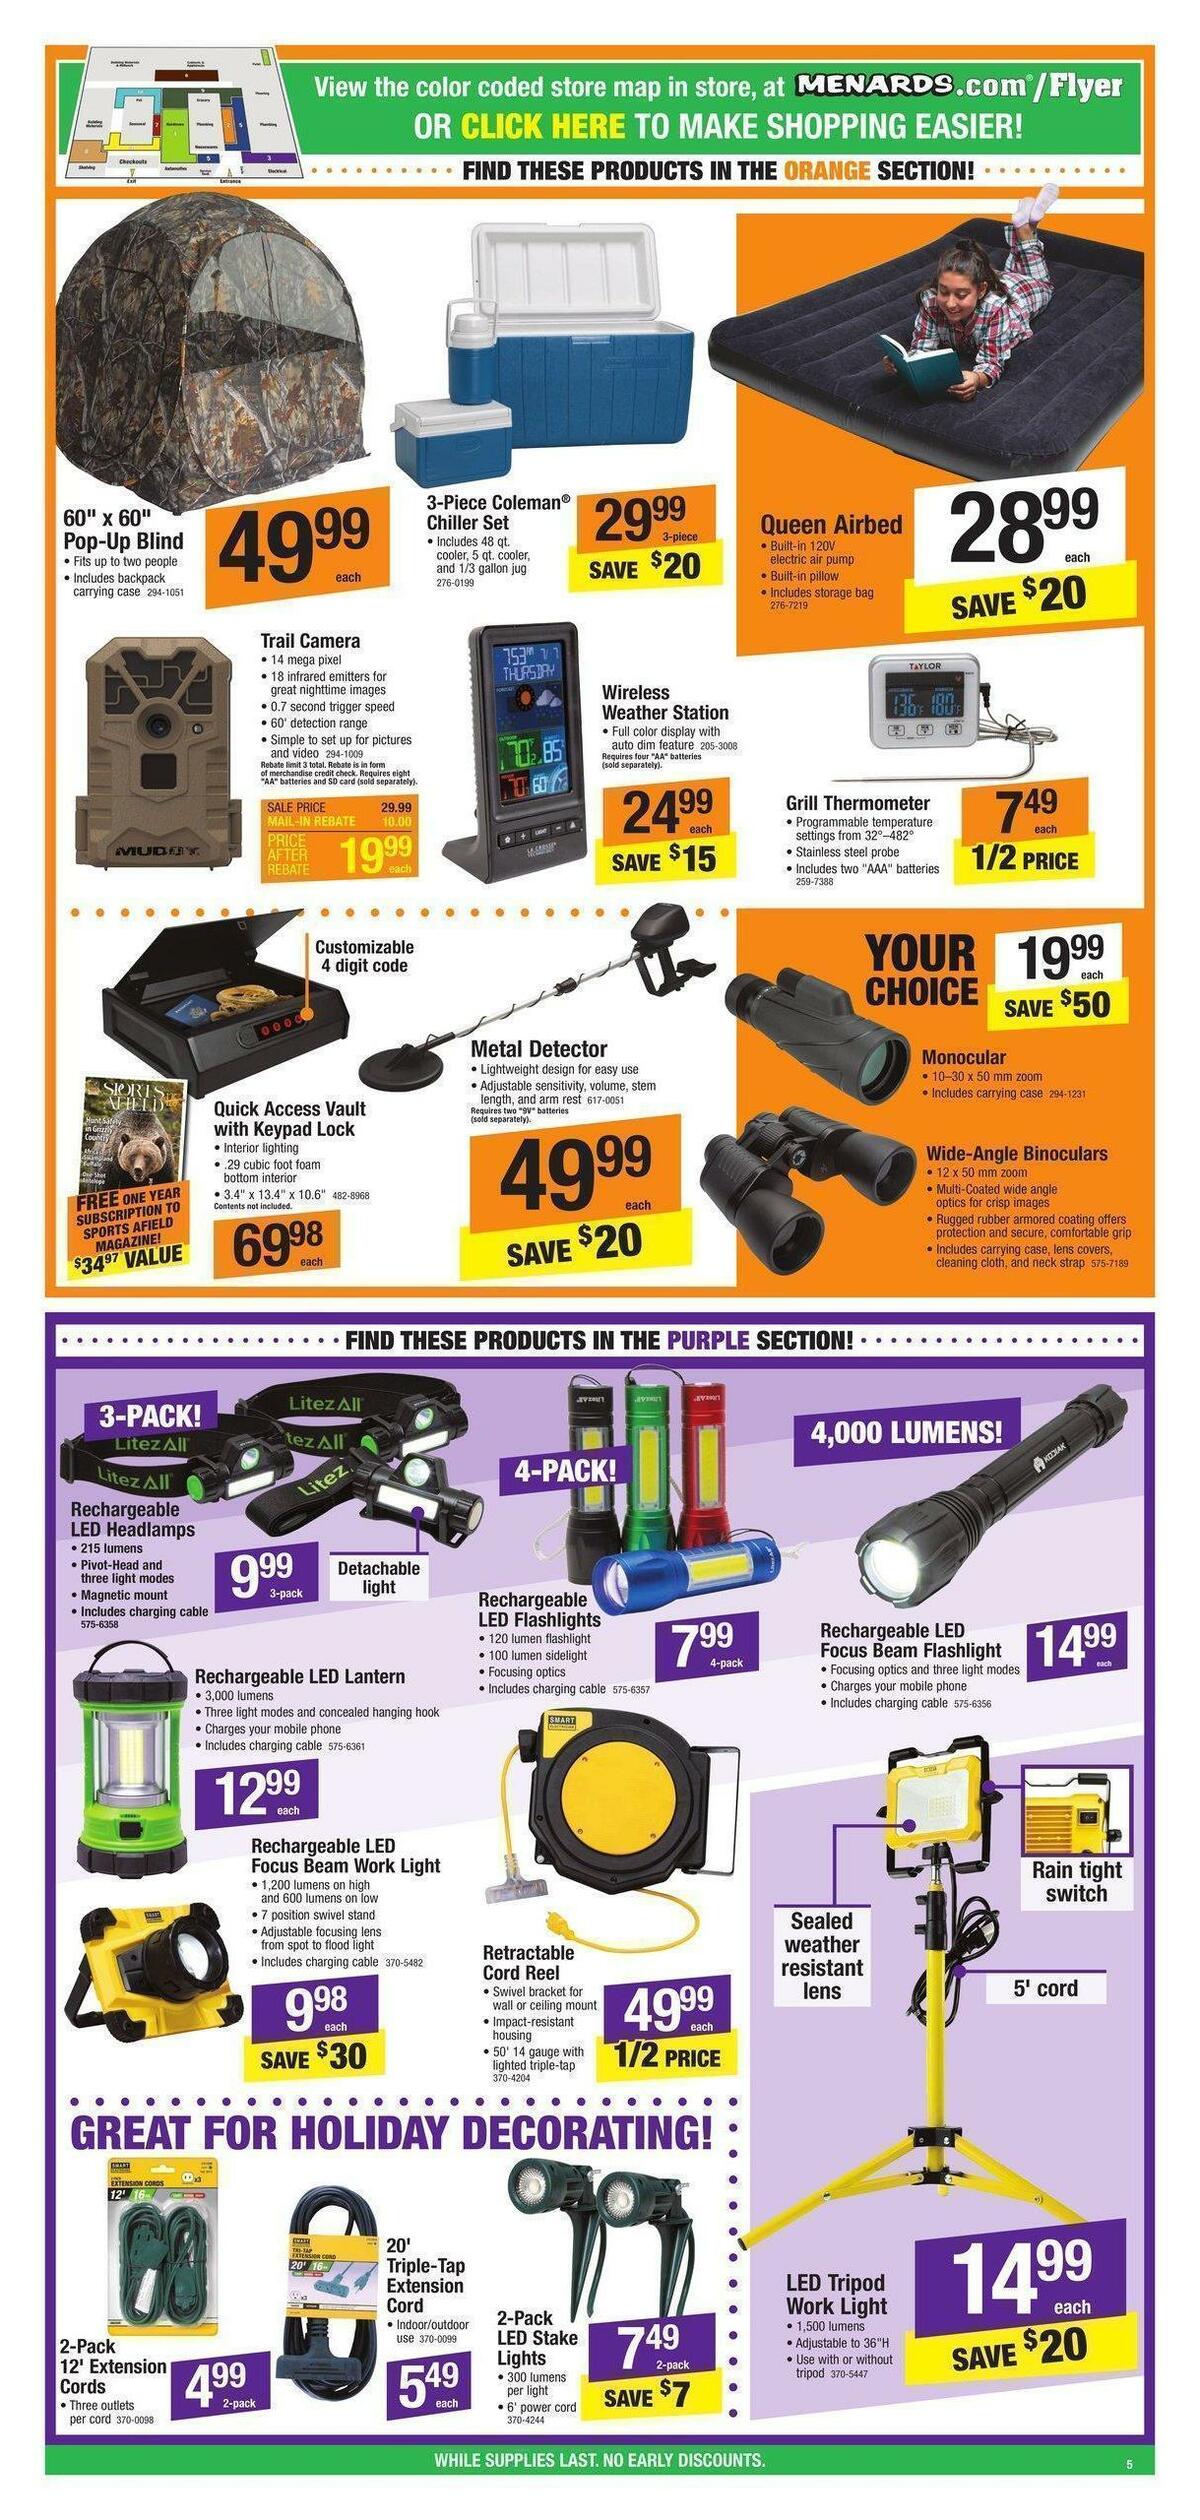 Menards Black Friday Sale Weekly Ad from November 25